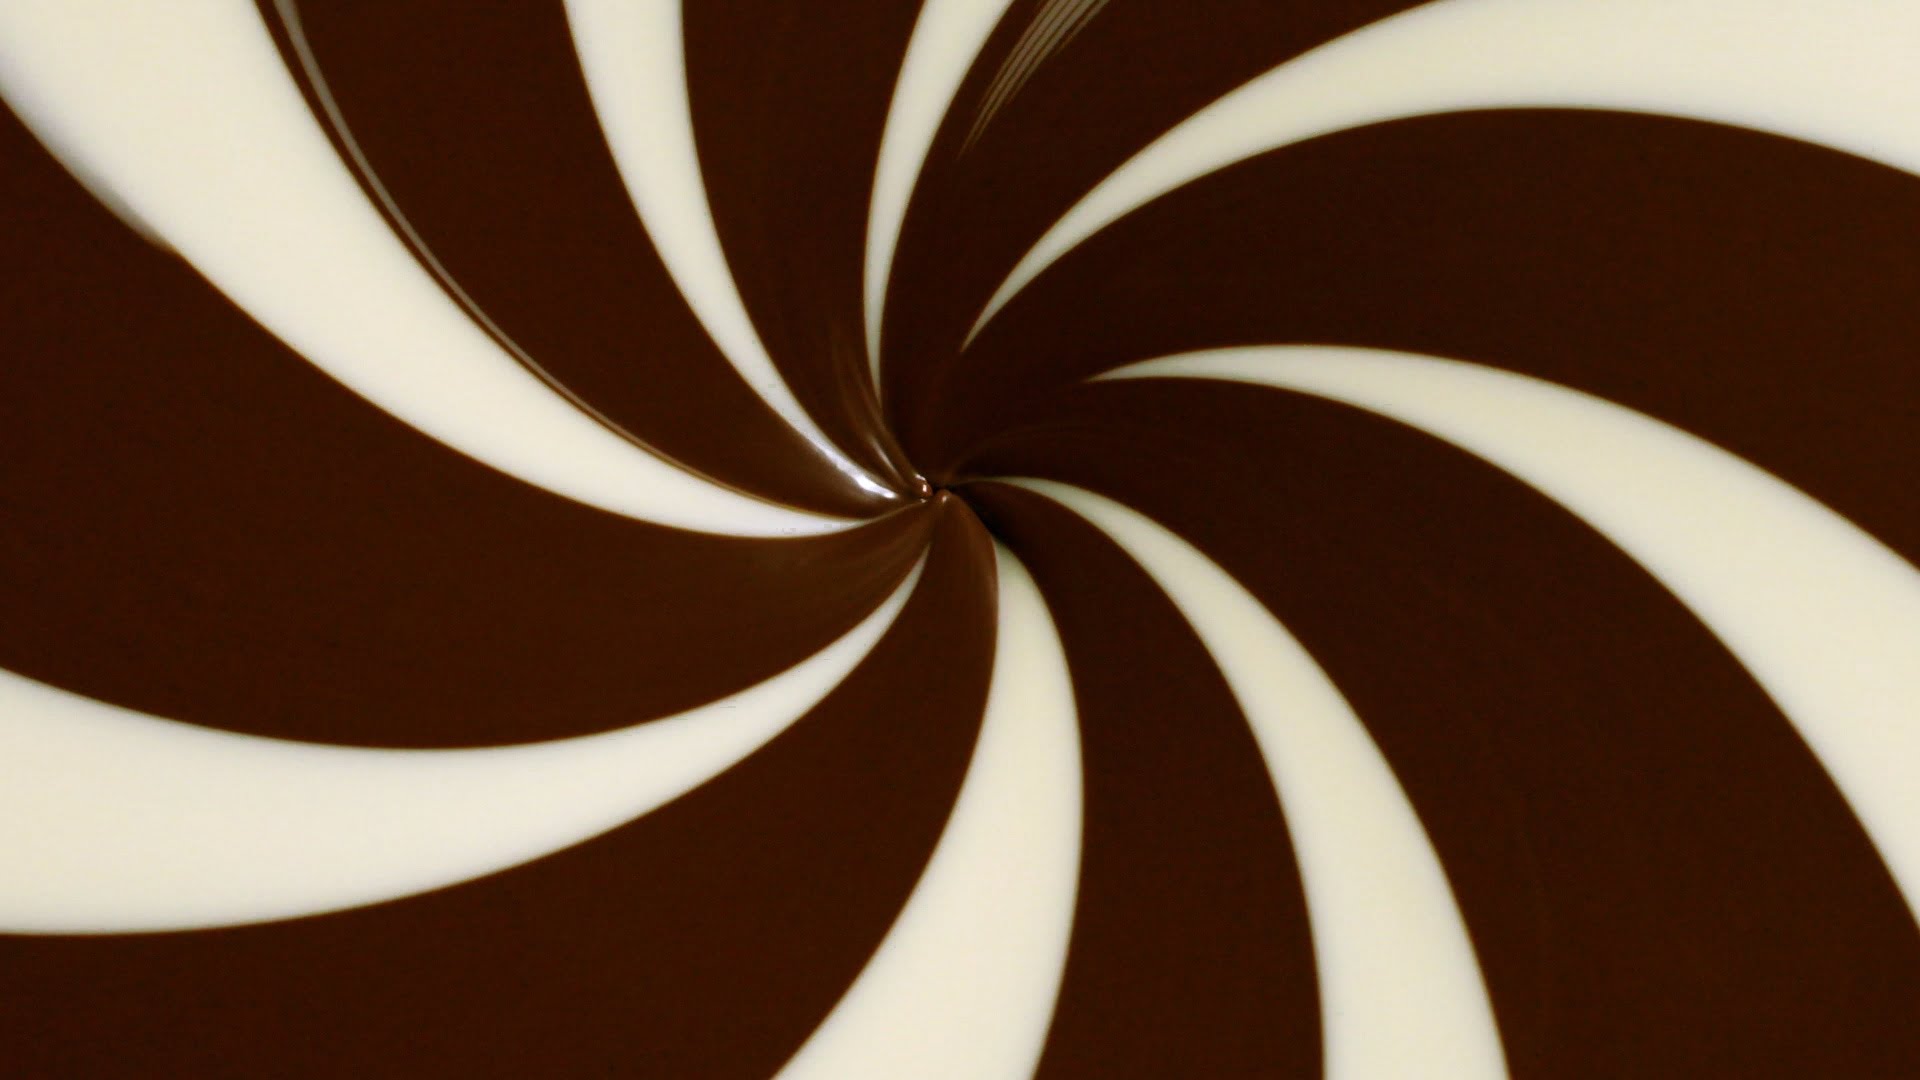 Haigh's Chocolate Spiral Design